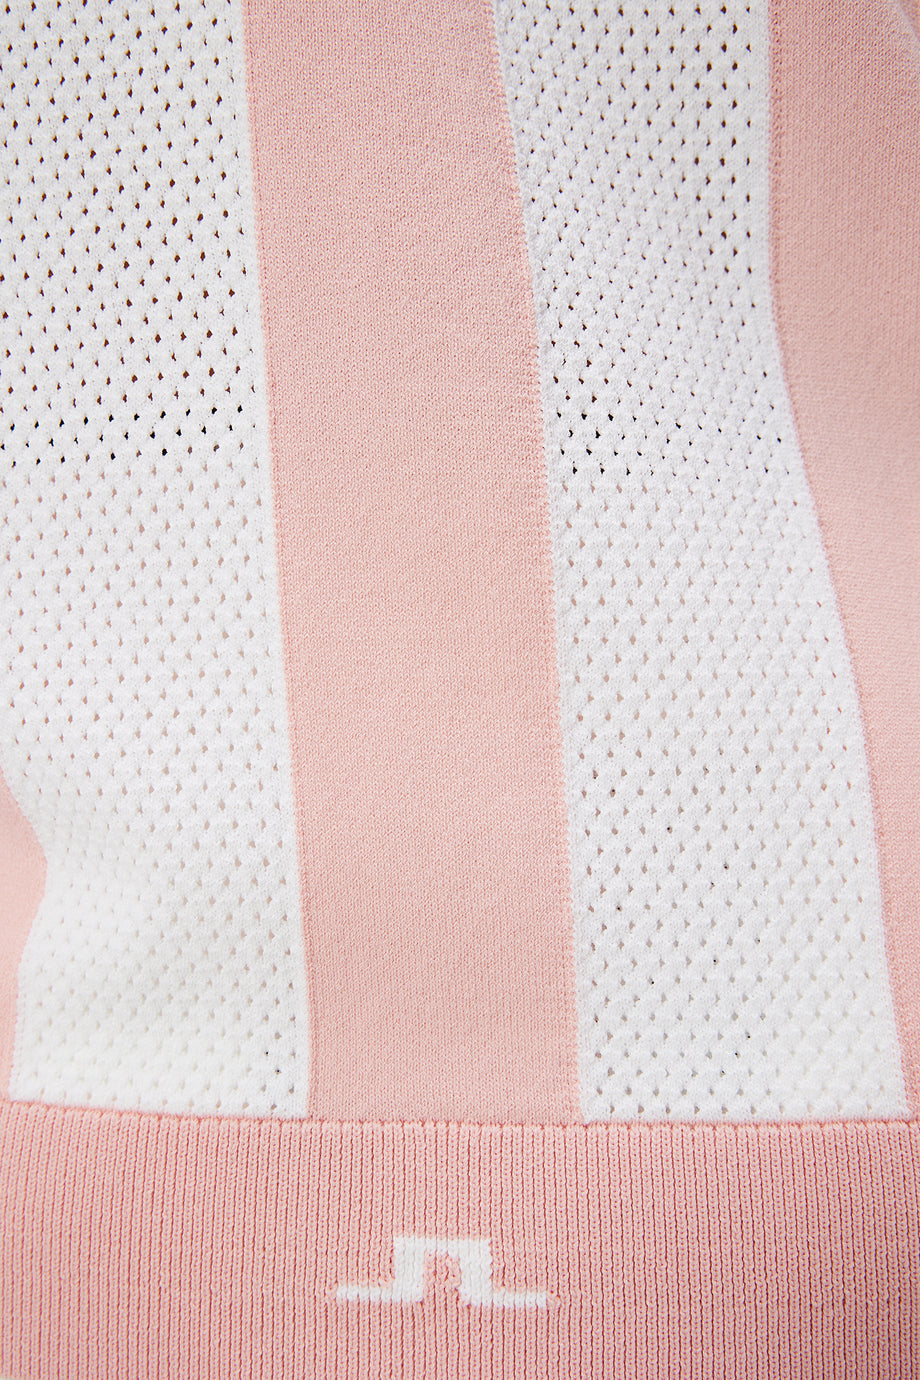 Maseo Knitted Shirt / Powder Pink